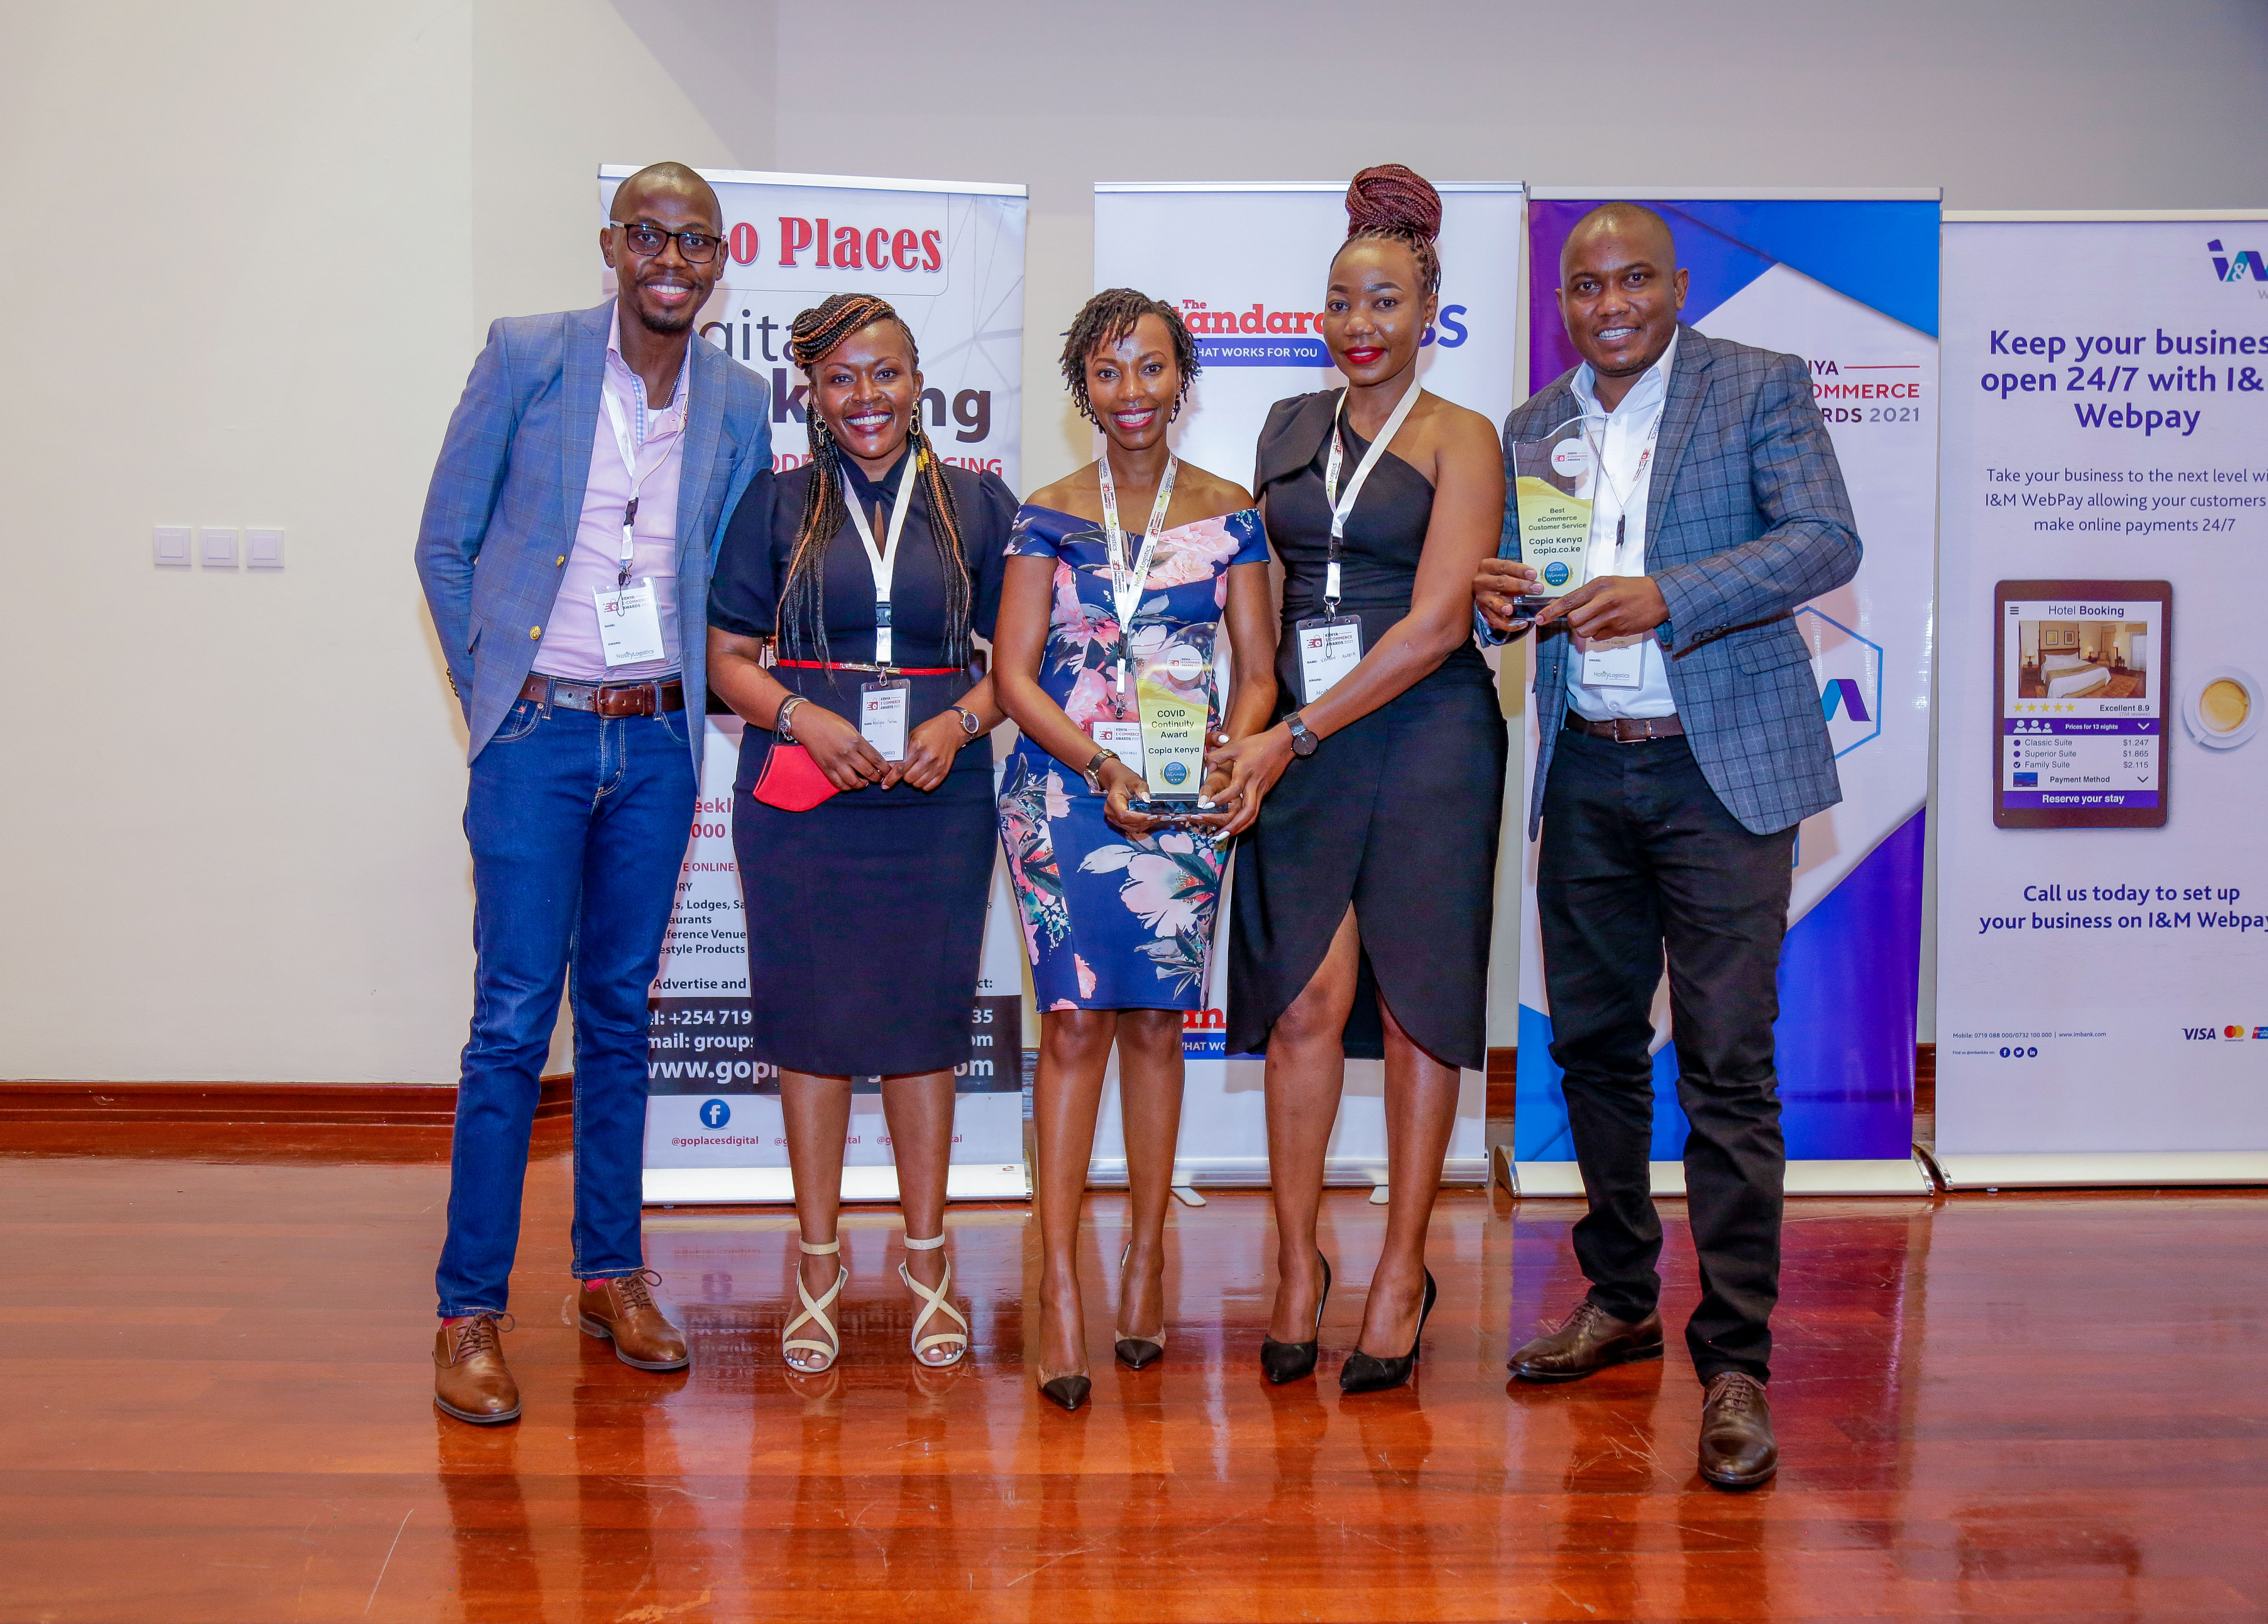 Copia Shines At The Kenya E-commerce Awards